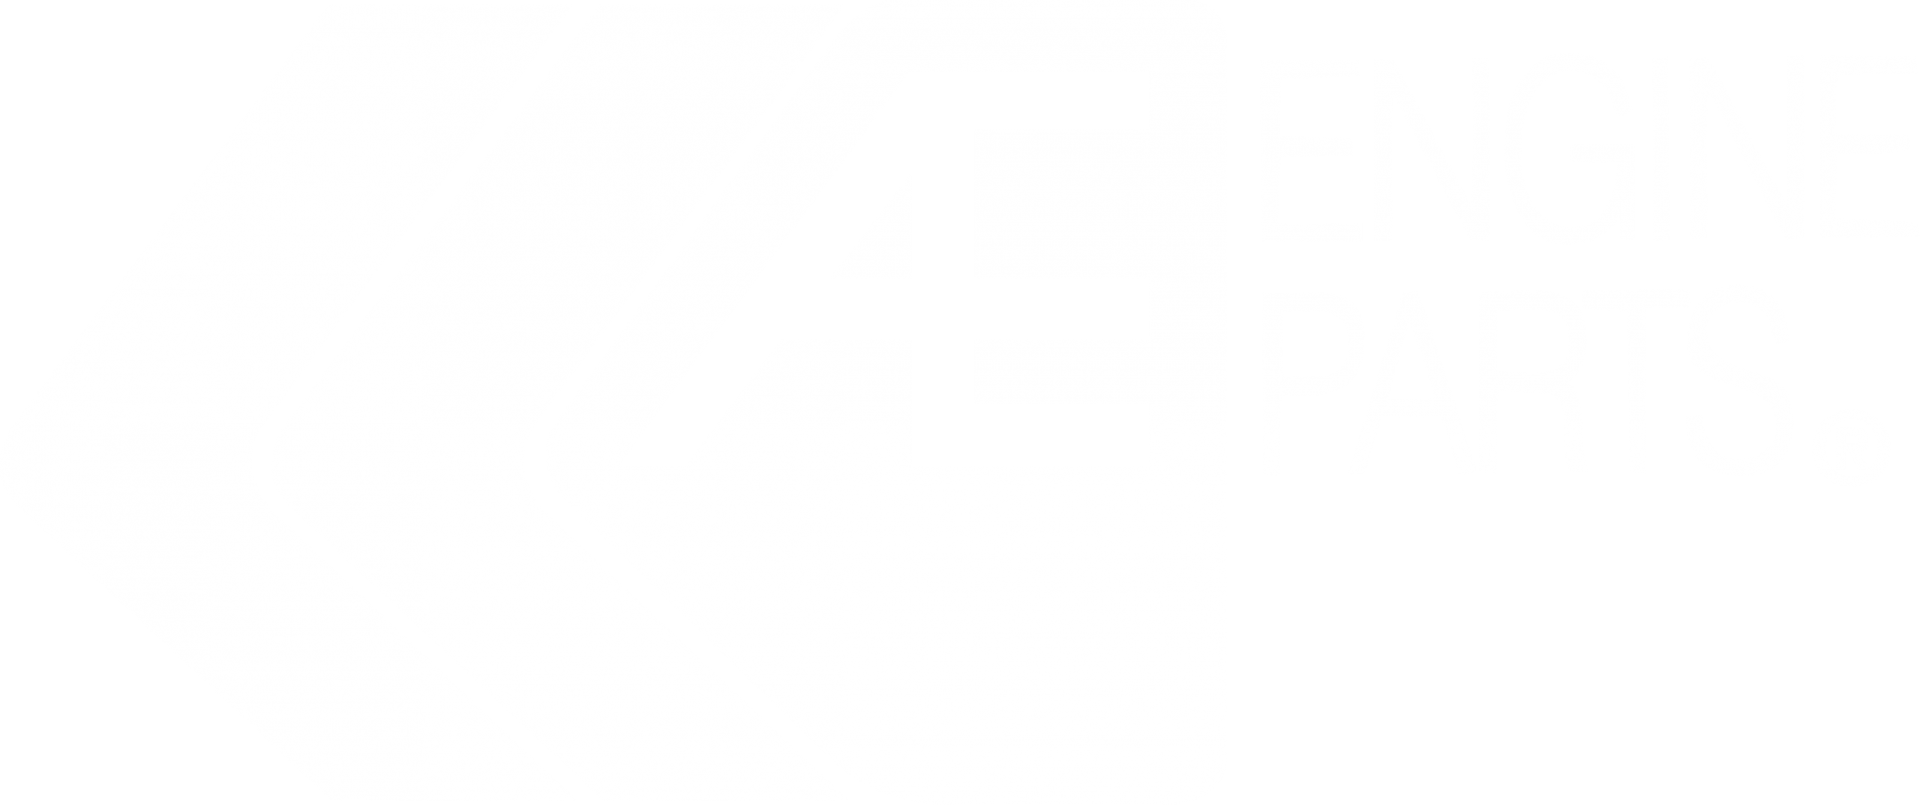 ae-engine-parts-01-logo-transparent